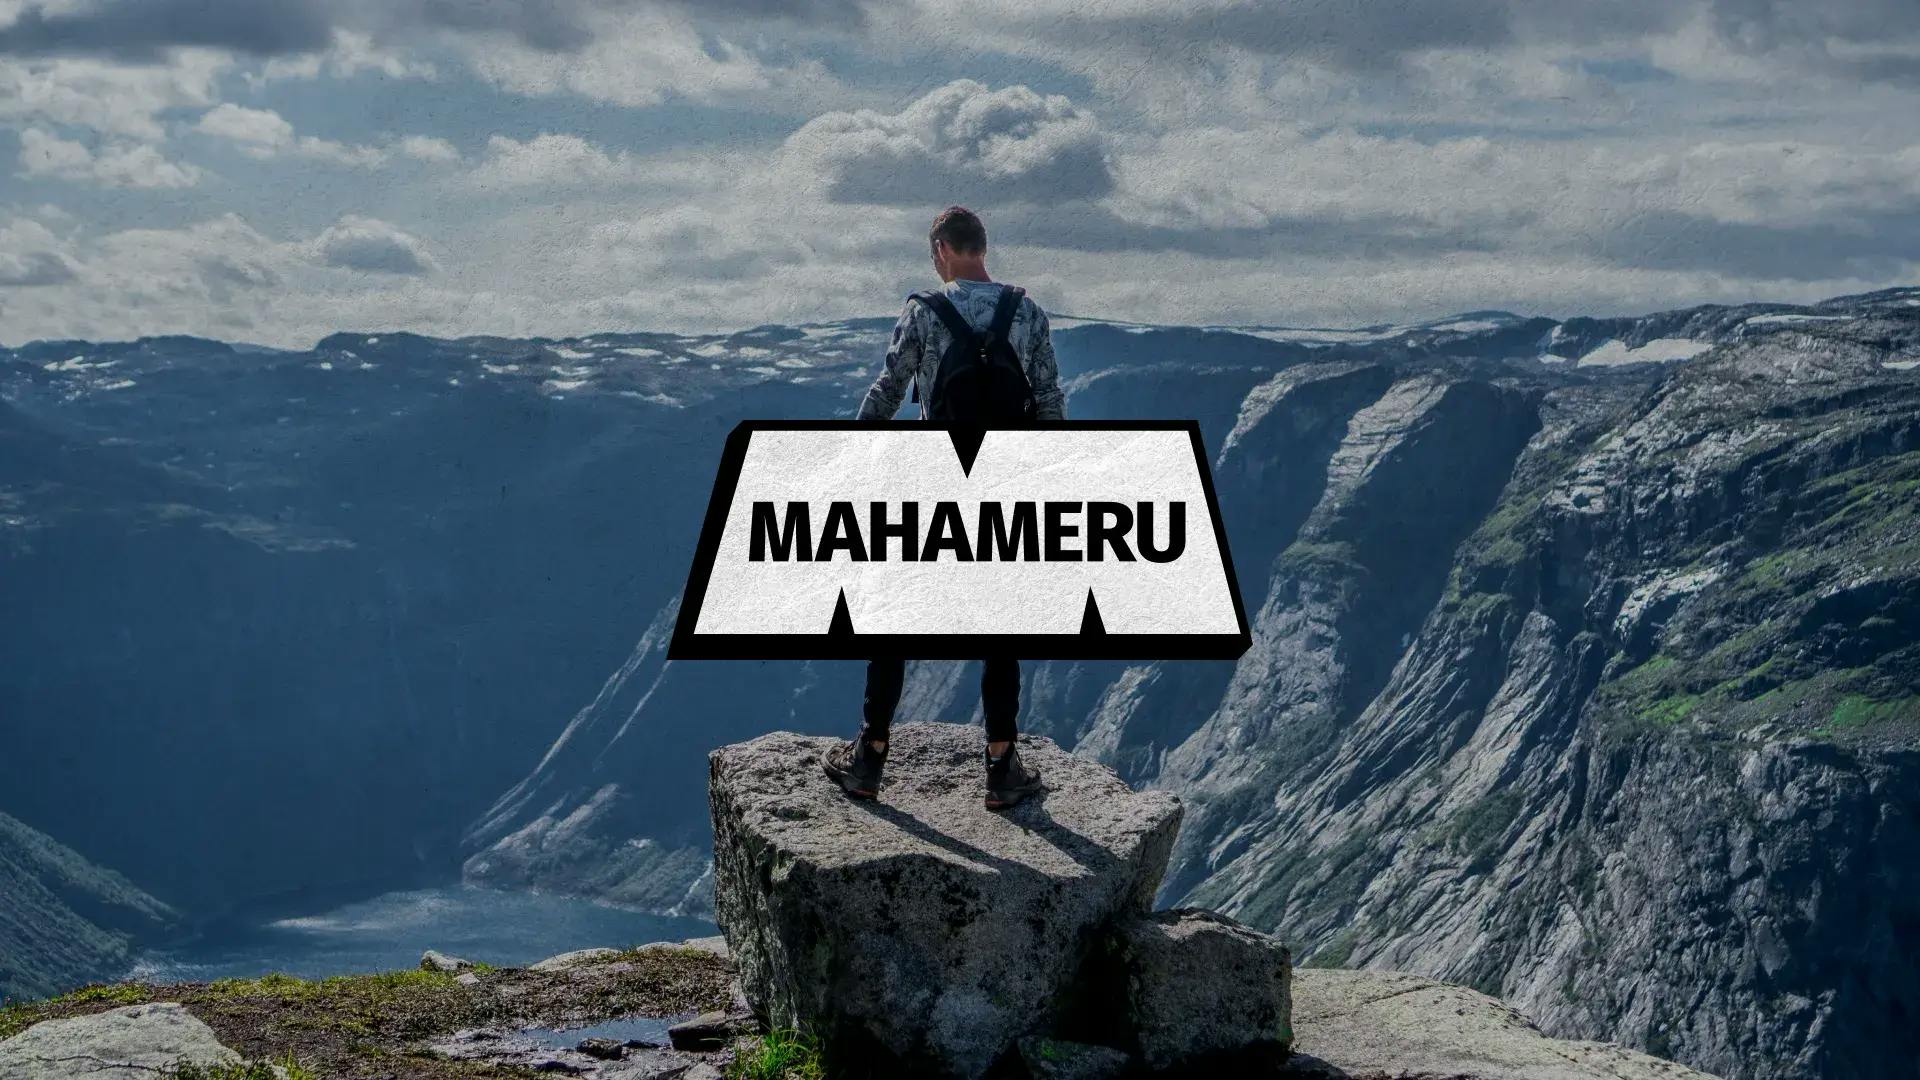 Mahameru: a Great Journey